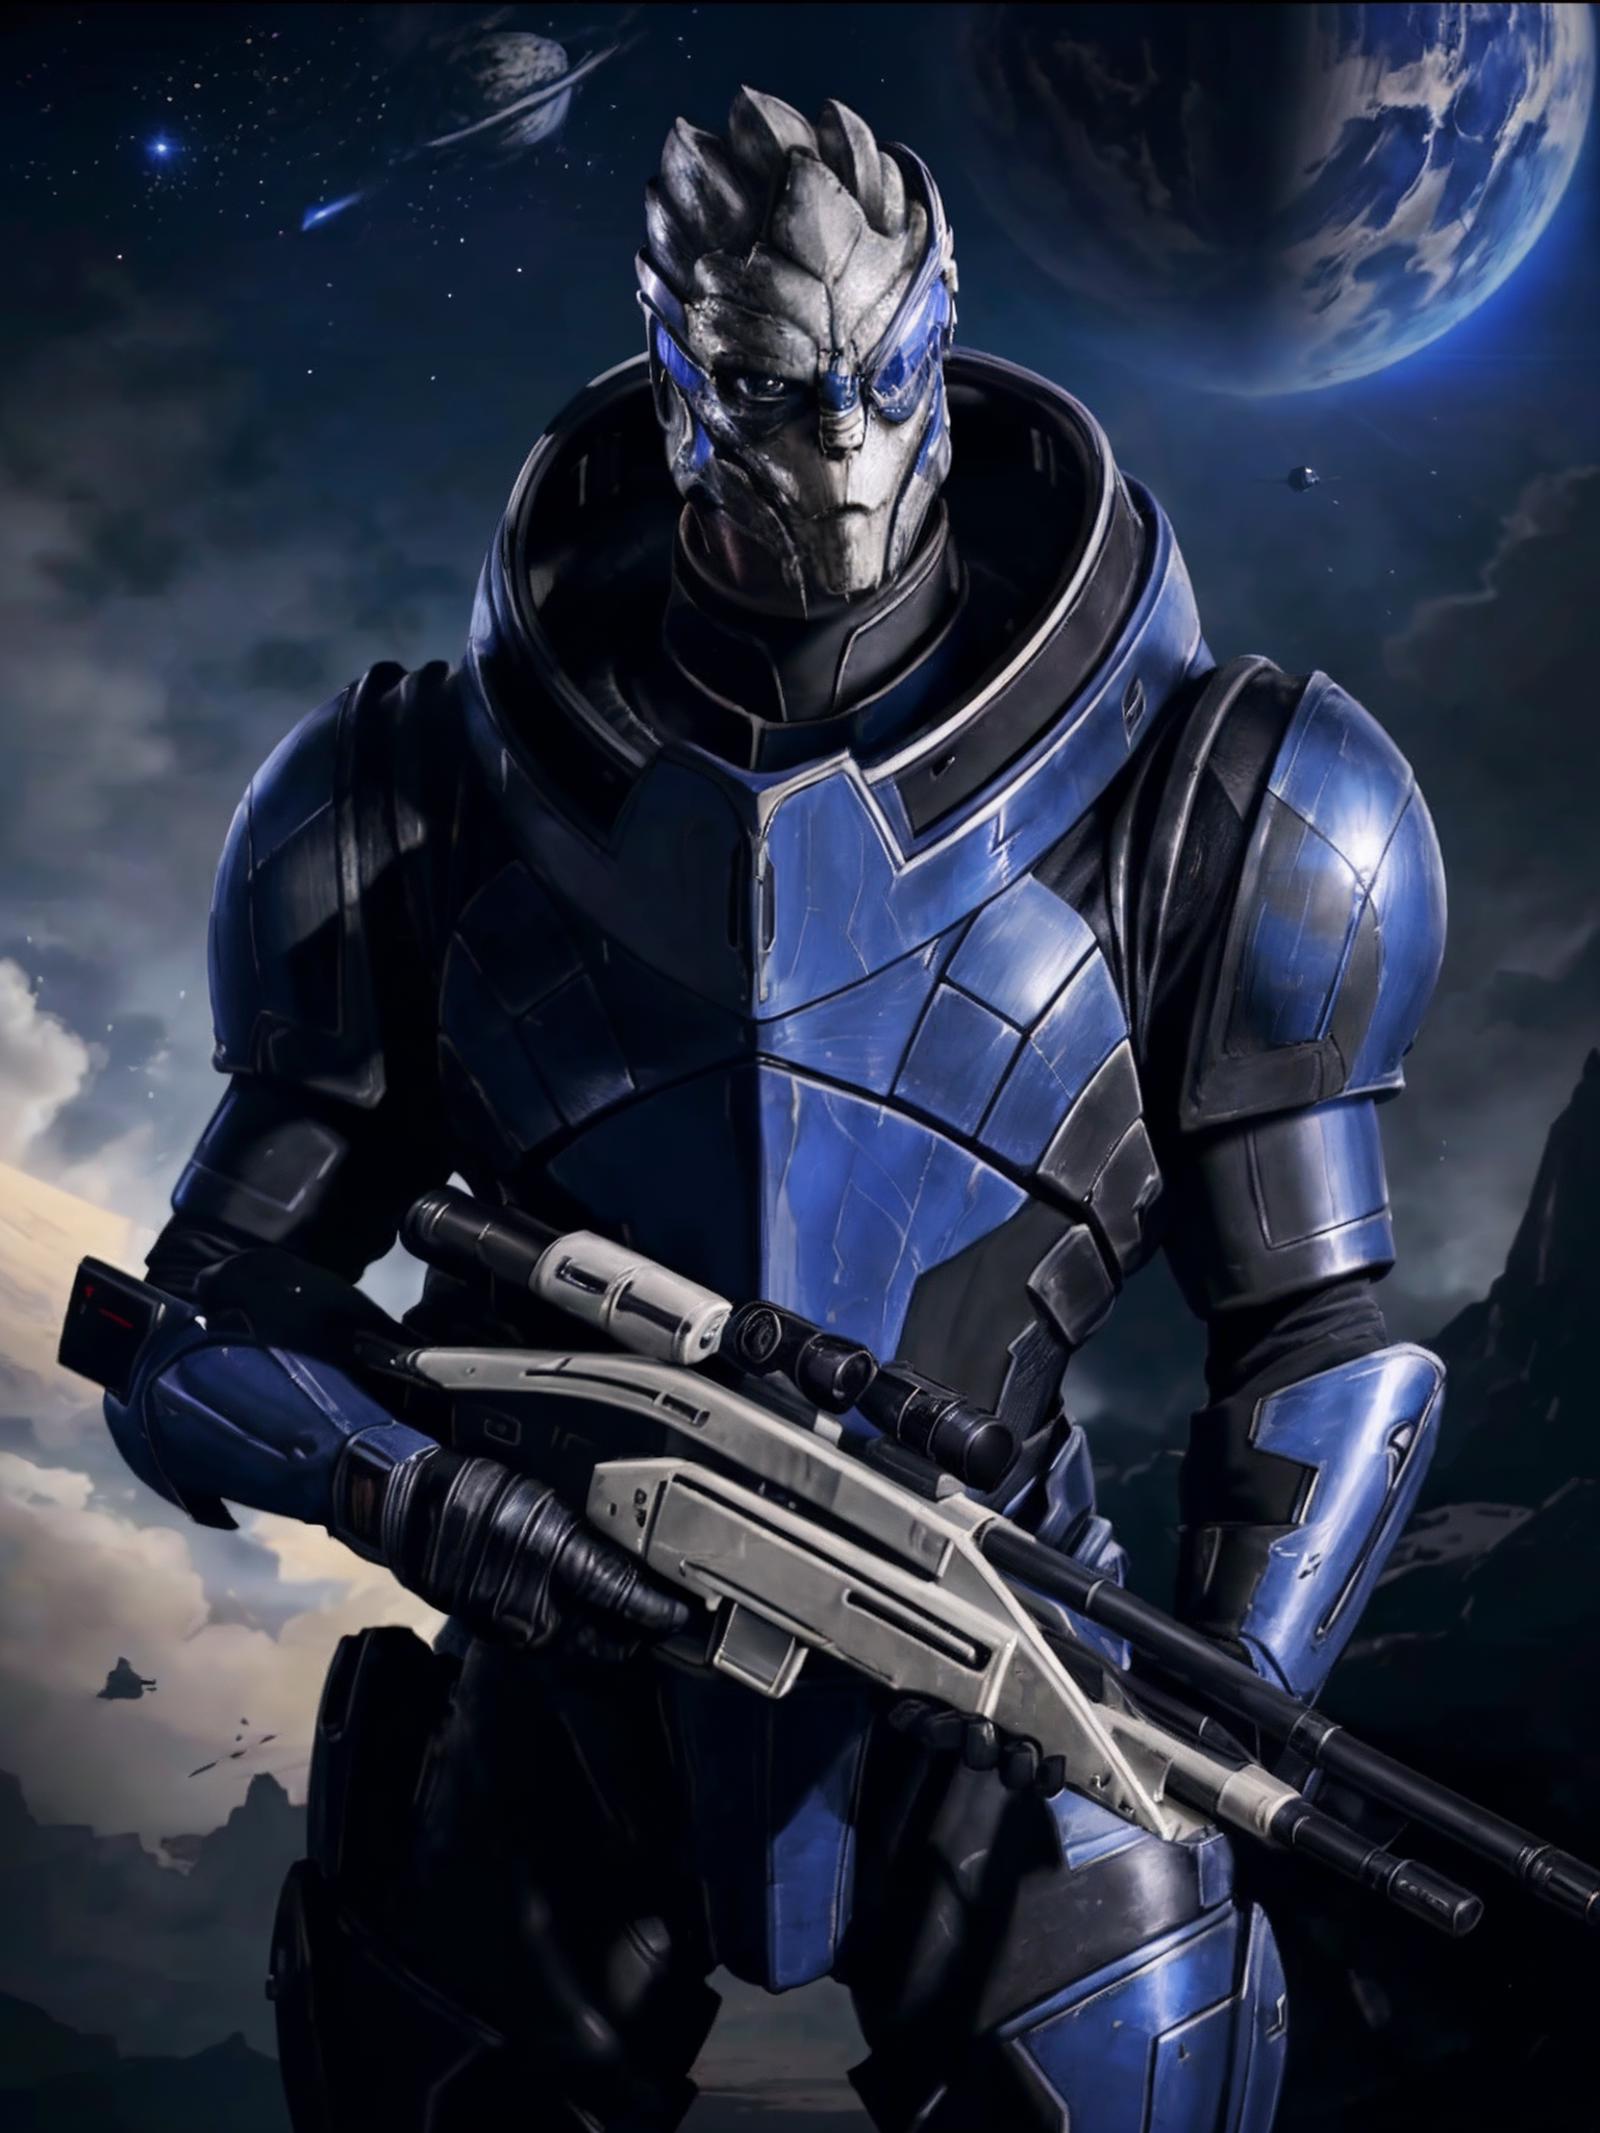 Garrus Vakarian (Mass Effect) LoRA image by Taloji